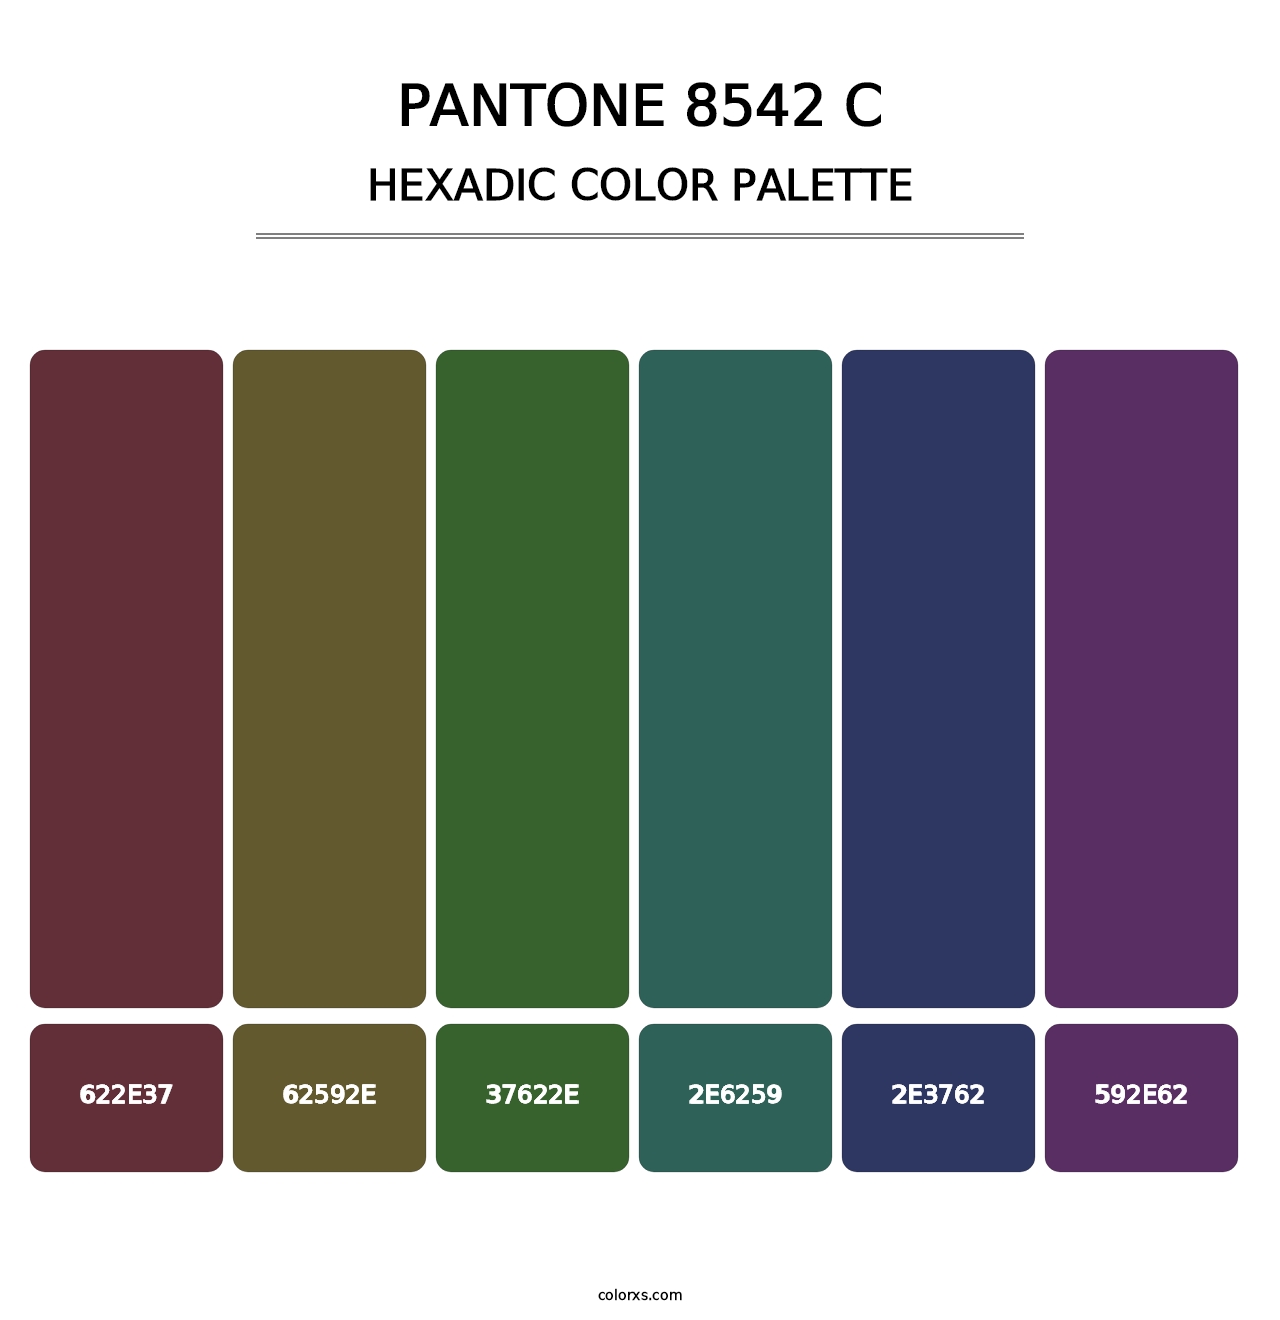 PANTONE 8542 C - Hexadic Color Palette